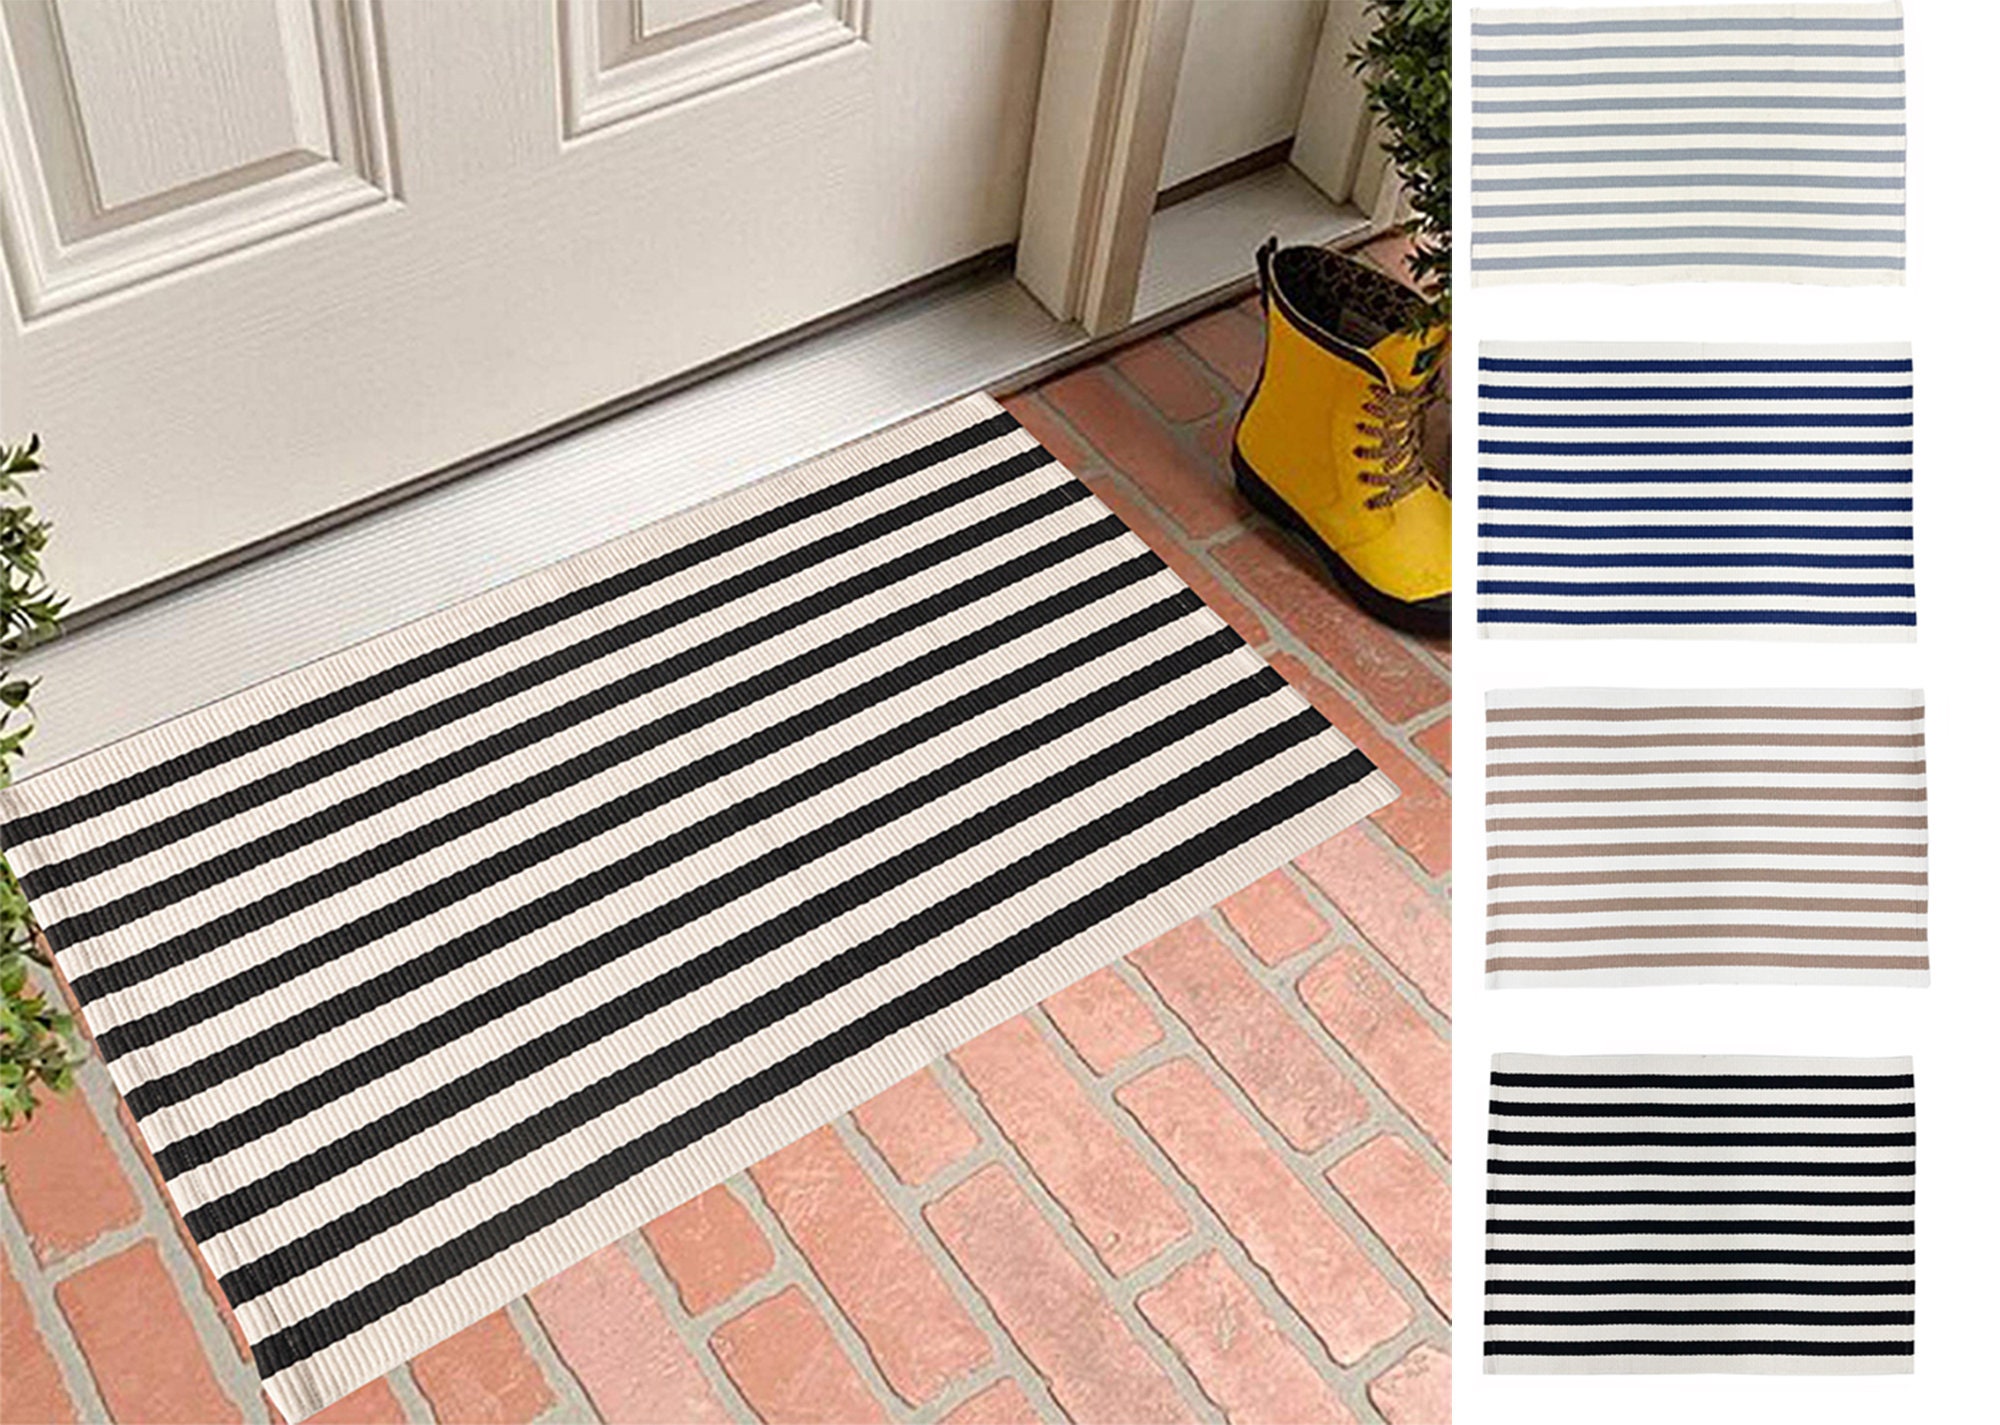 Woven Classic Stripe Cotton Blend Carpet, Indoor Outdoor Floor Mat For Living Room, Entryway, Bedroom & Dcor, 4 Colors - 2 Sizes